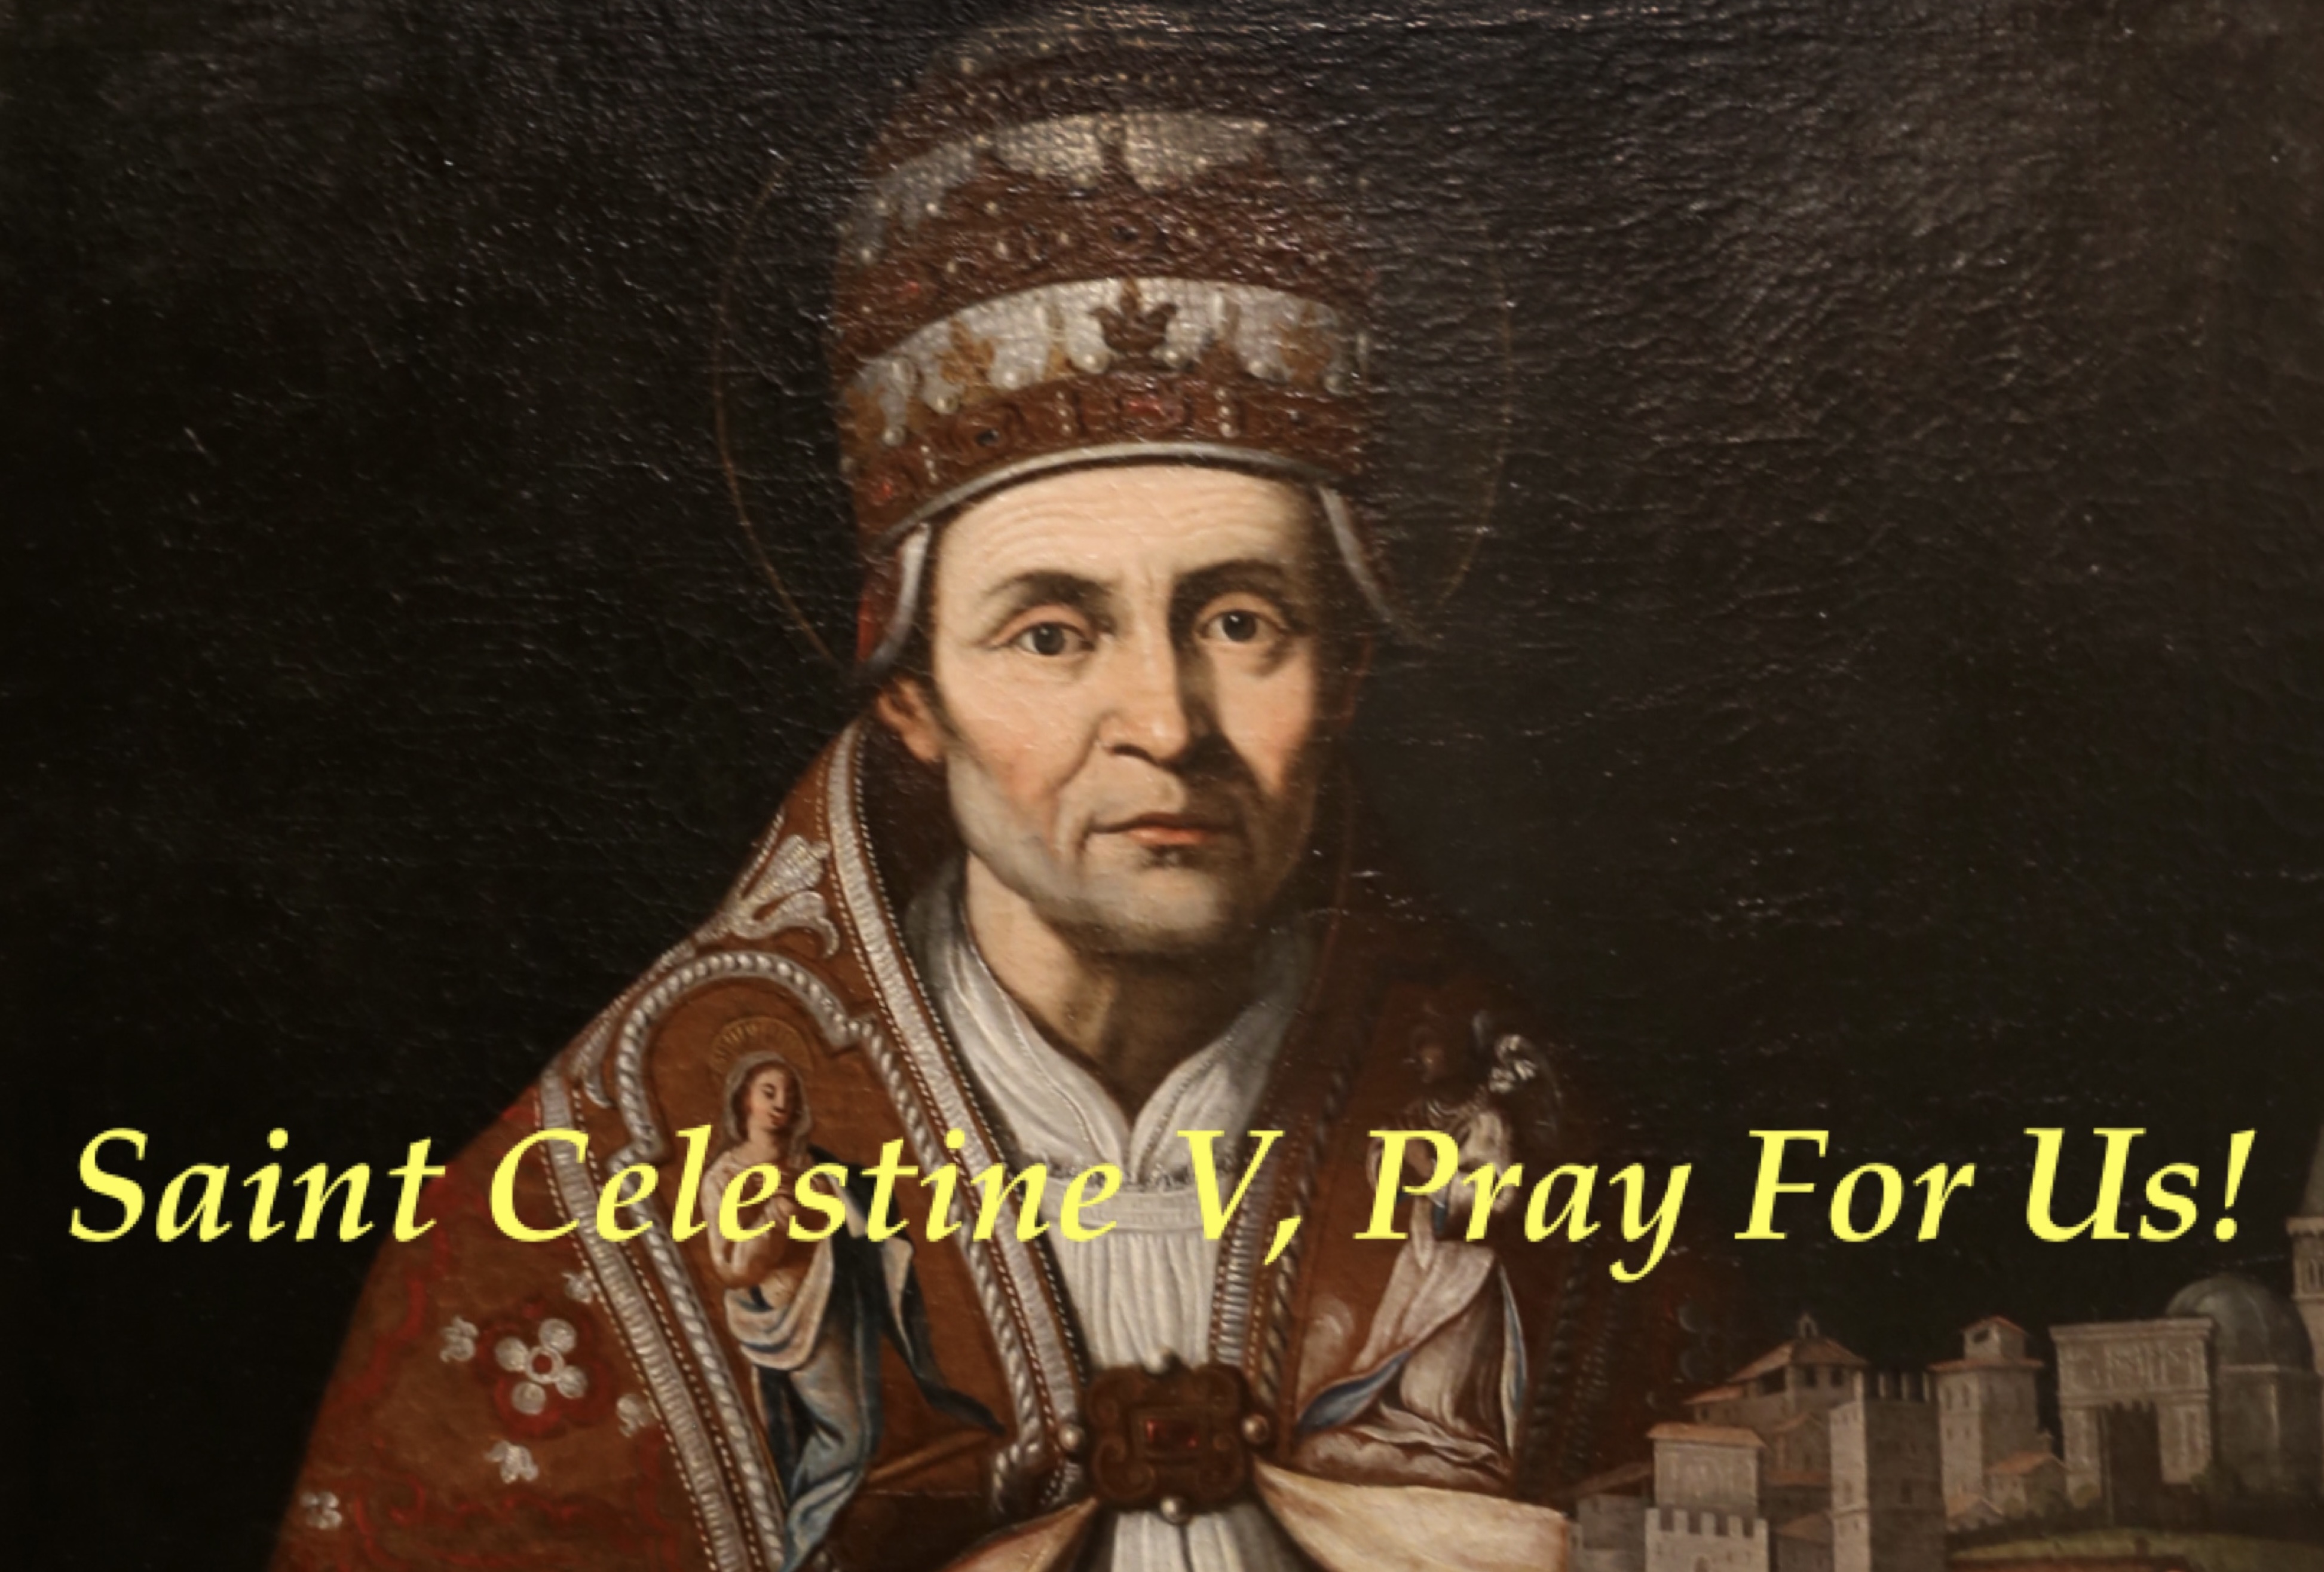 May 19th - Saint Celestine V